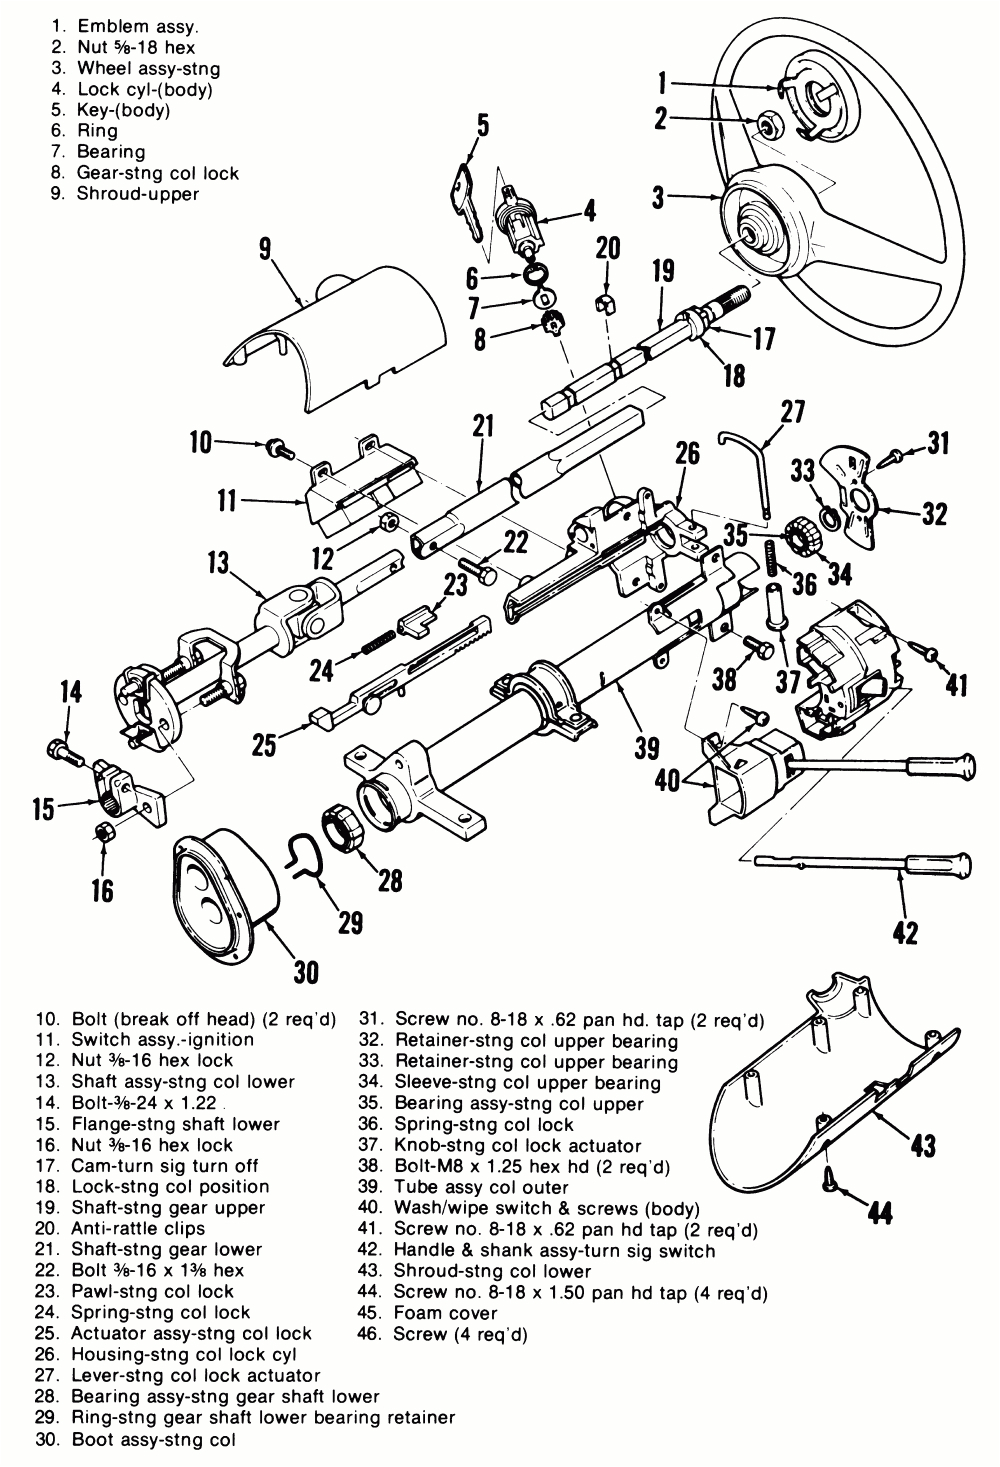 ford steering wiring wiring diagram 51 ford steering colum wiring diagram